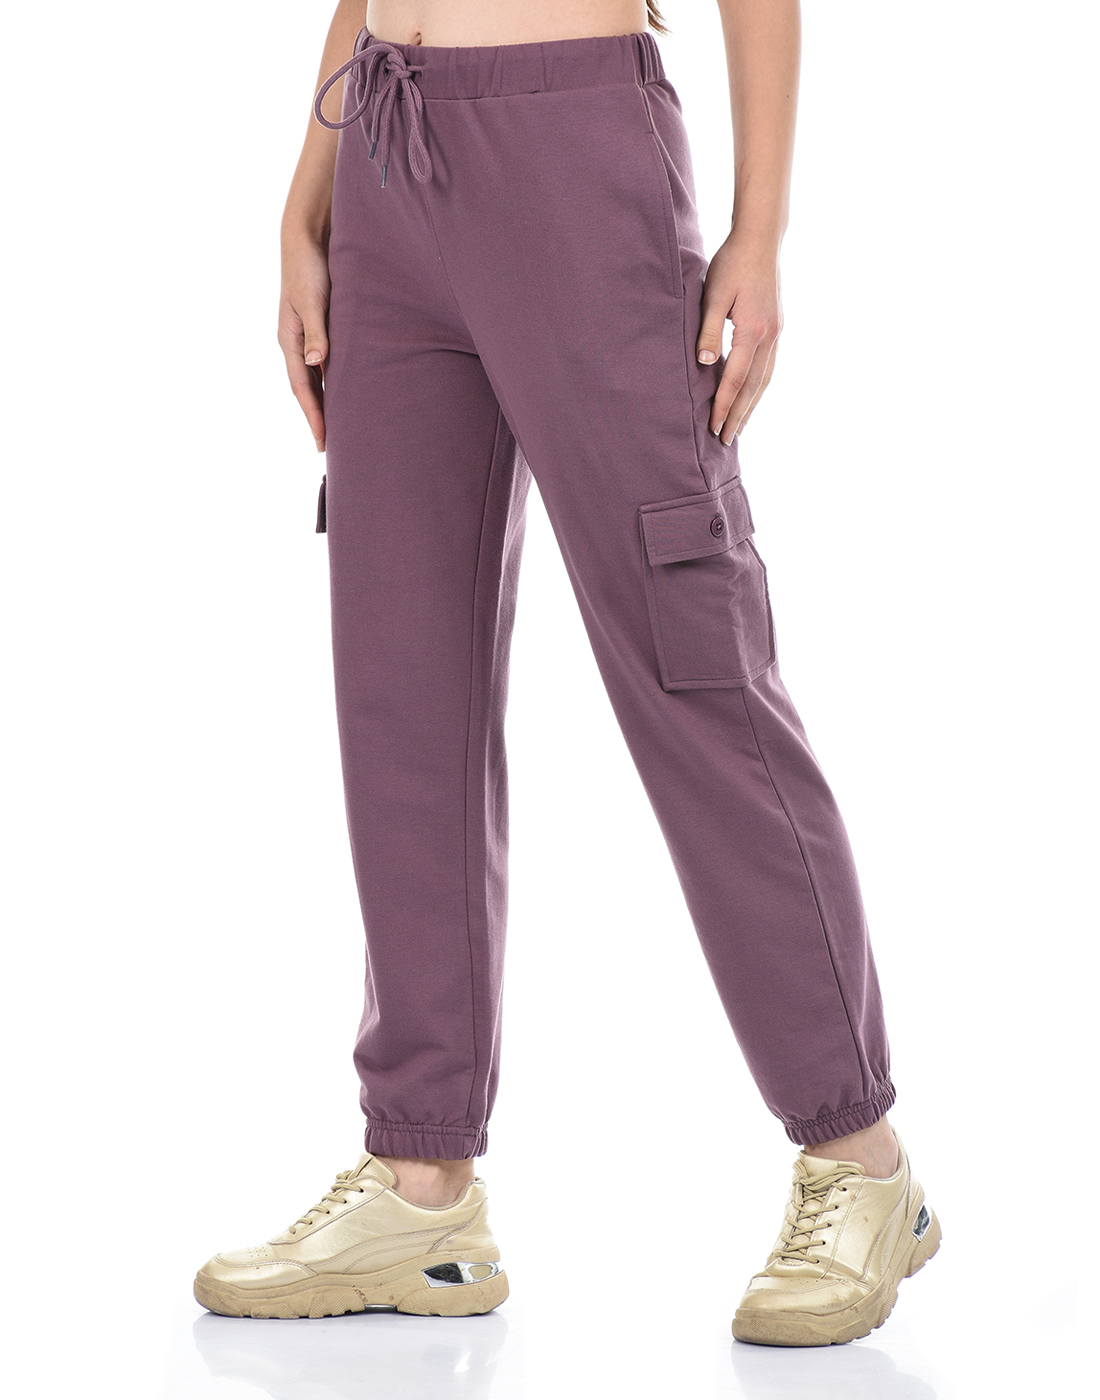 Oneway Women Solid Purple Track Pants